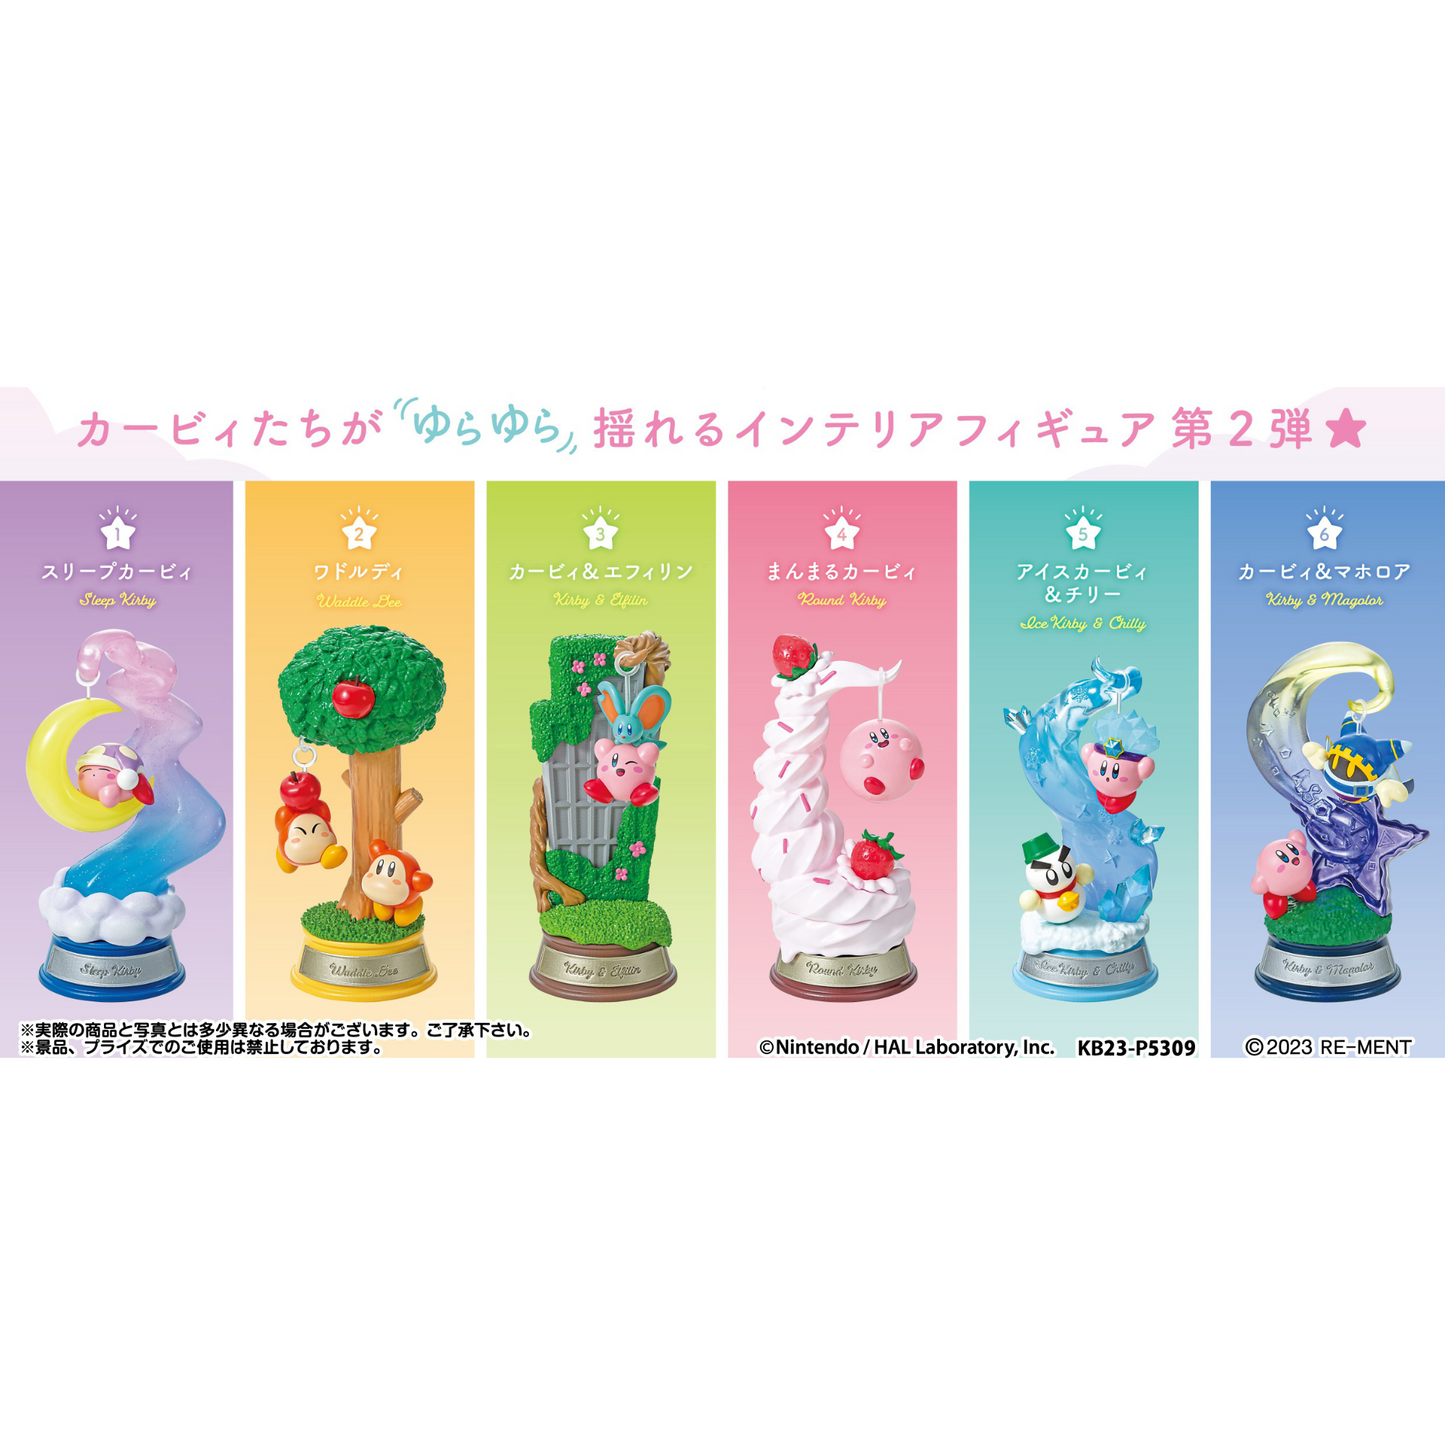 (Doosje beschadigd) Kirby | Dreamland swing figures: Kirby & Elfilin